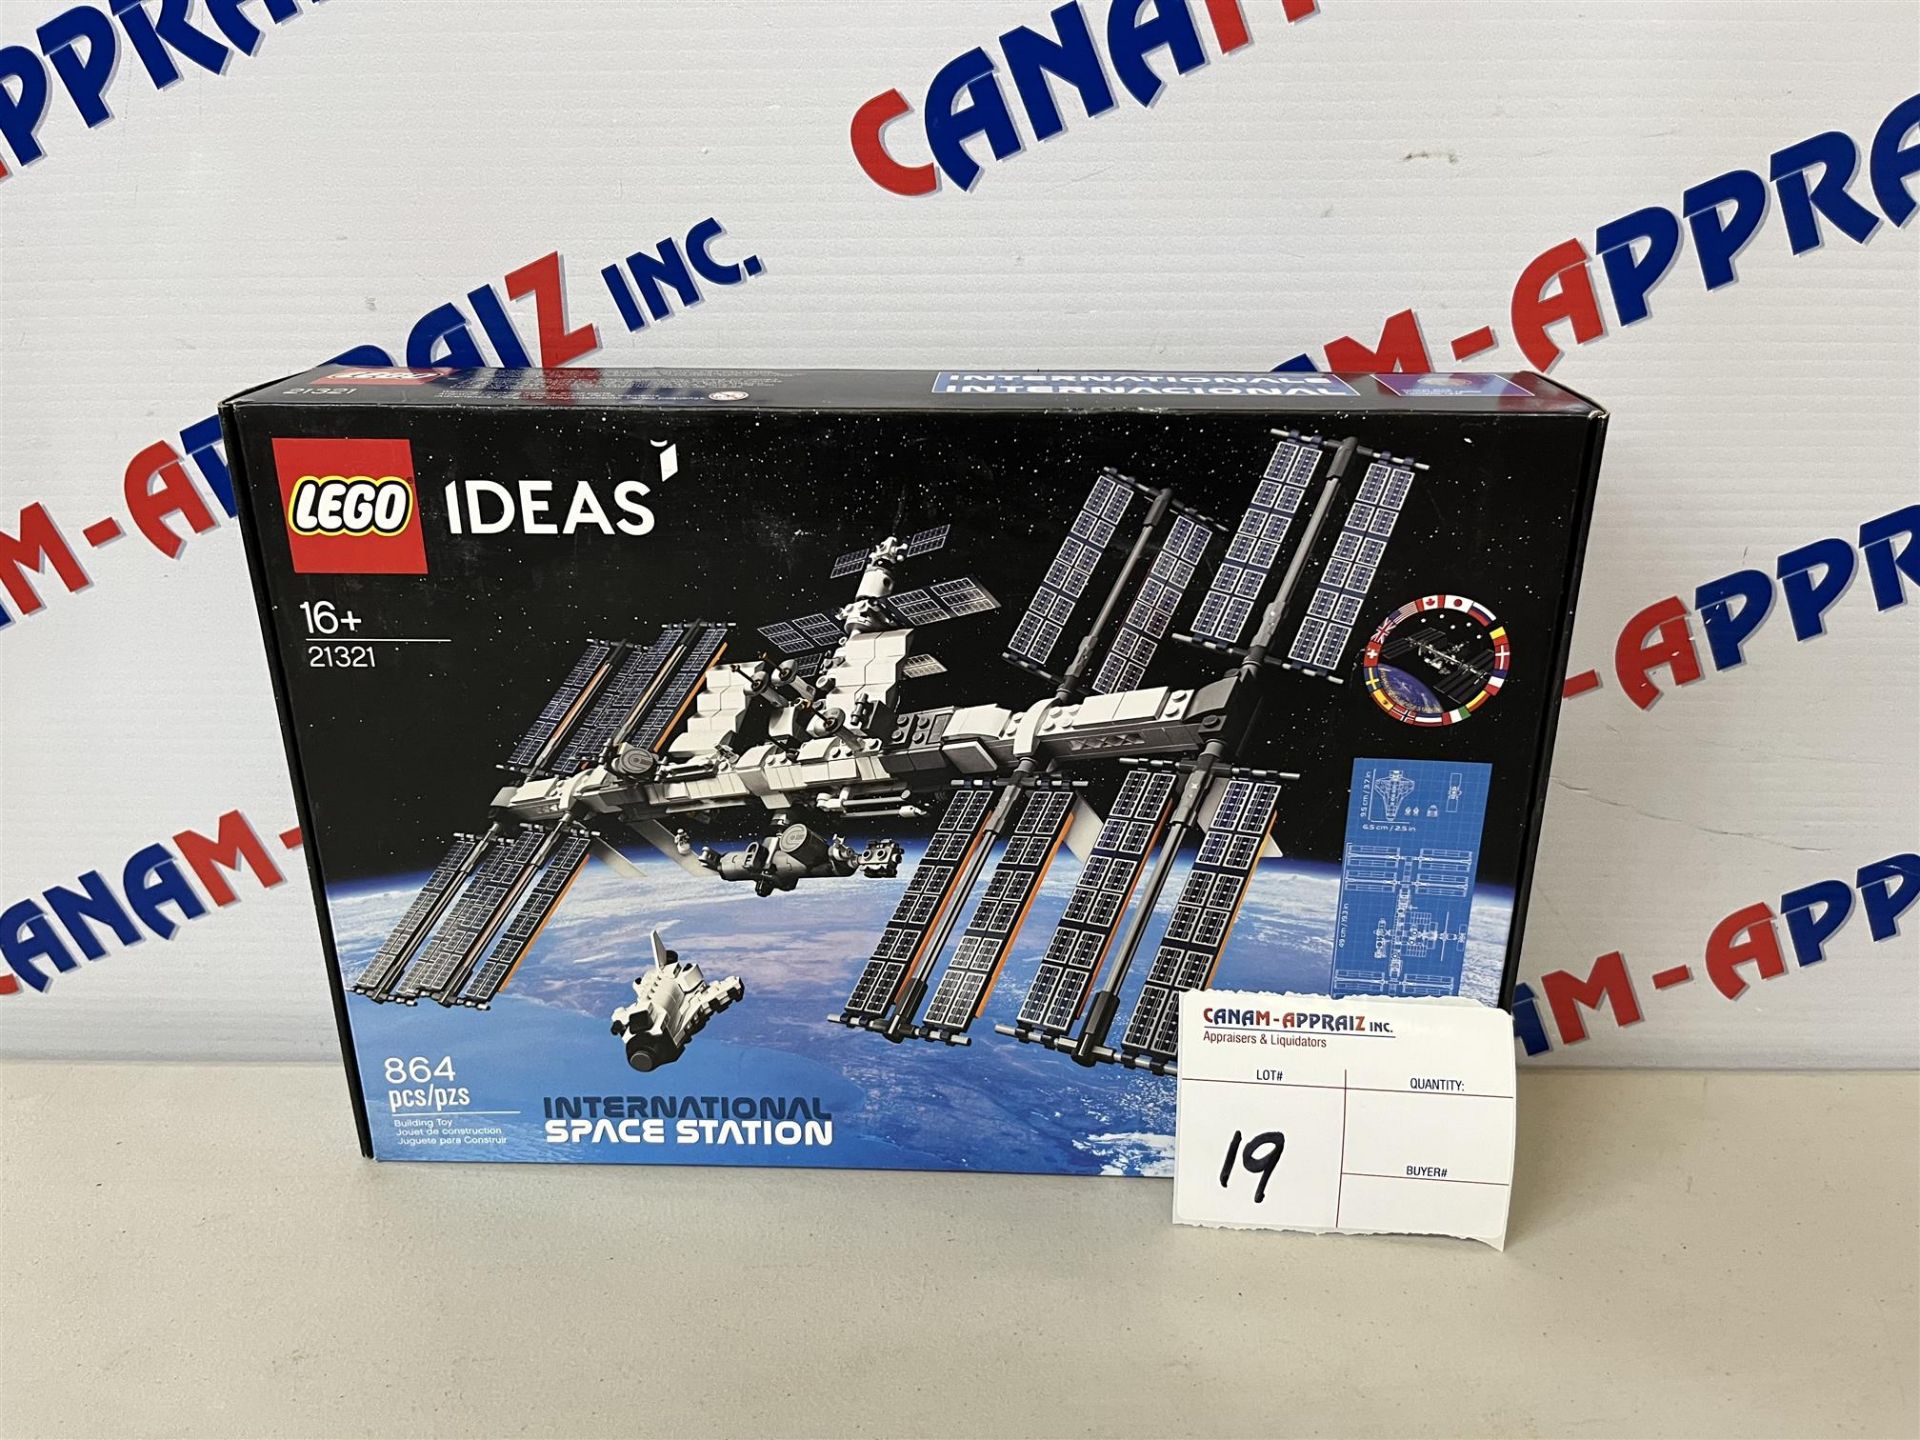 LEGO - 21321, 864 pcs - International Space Station